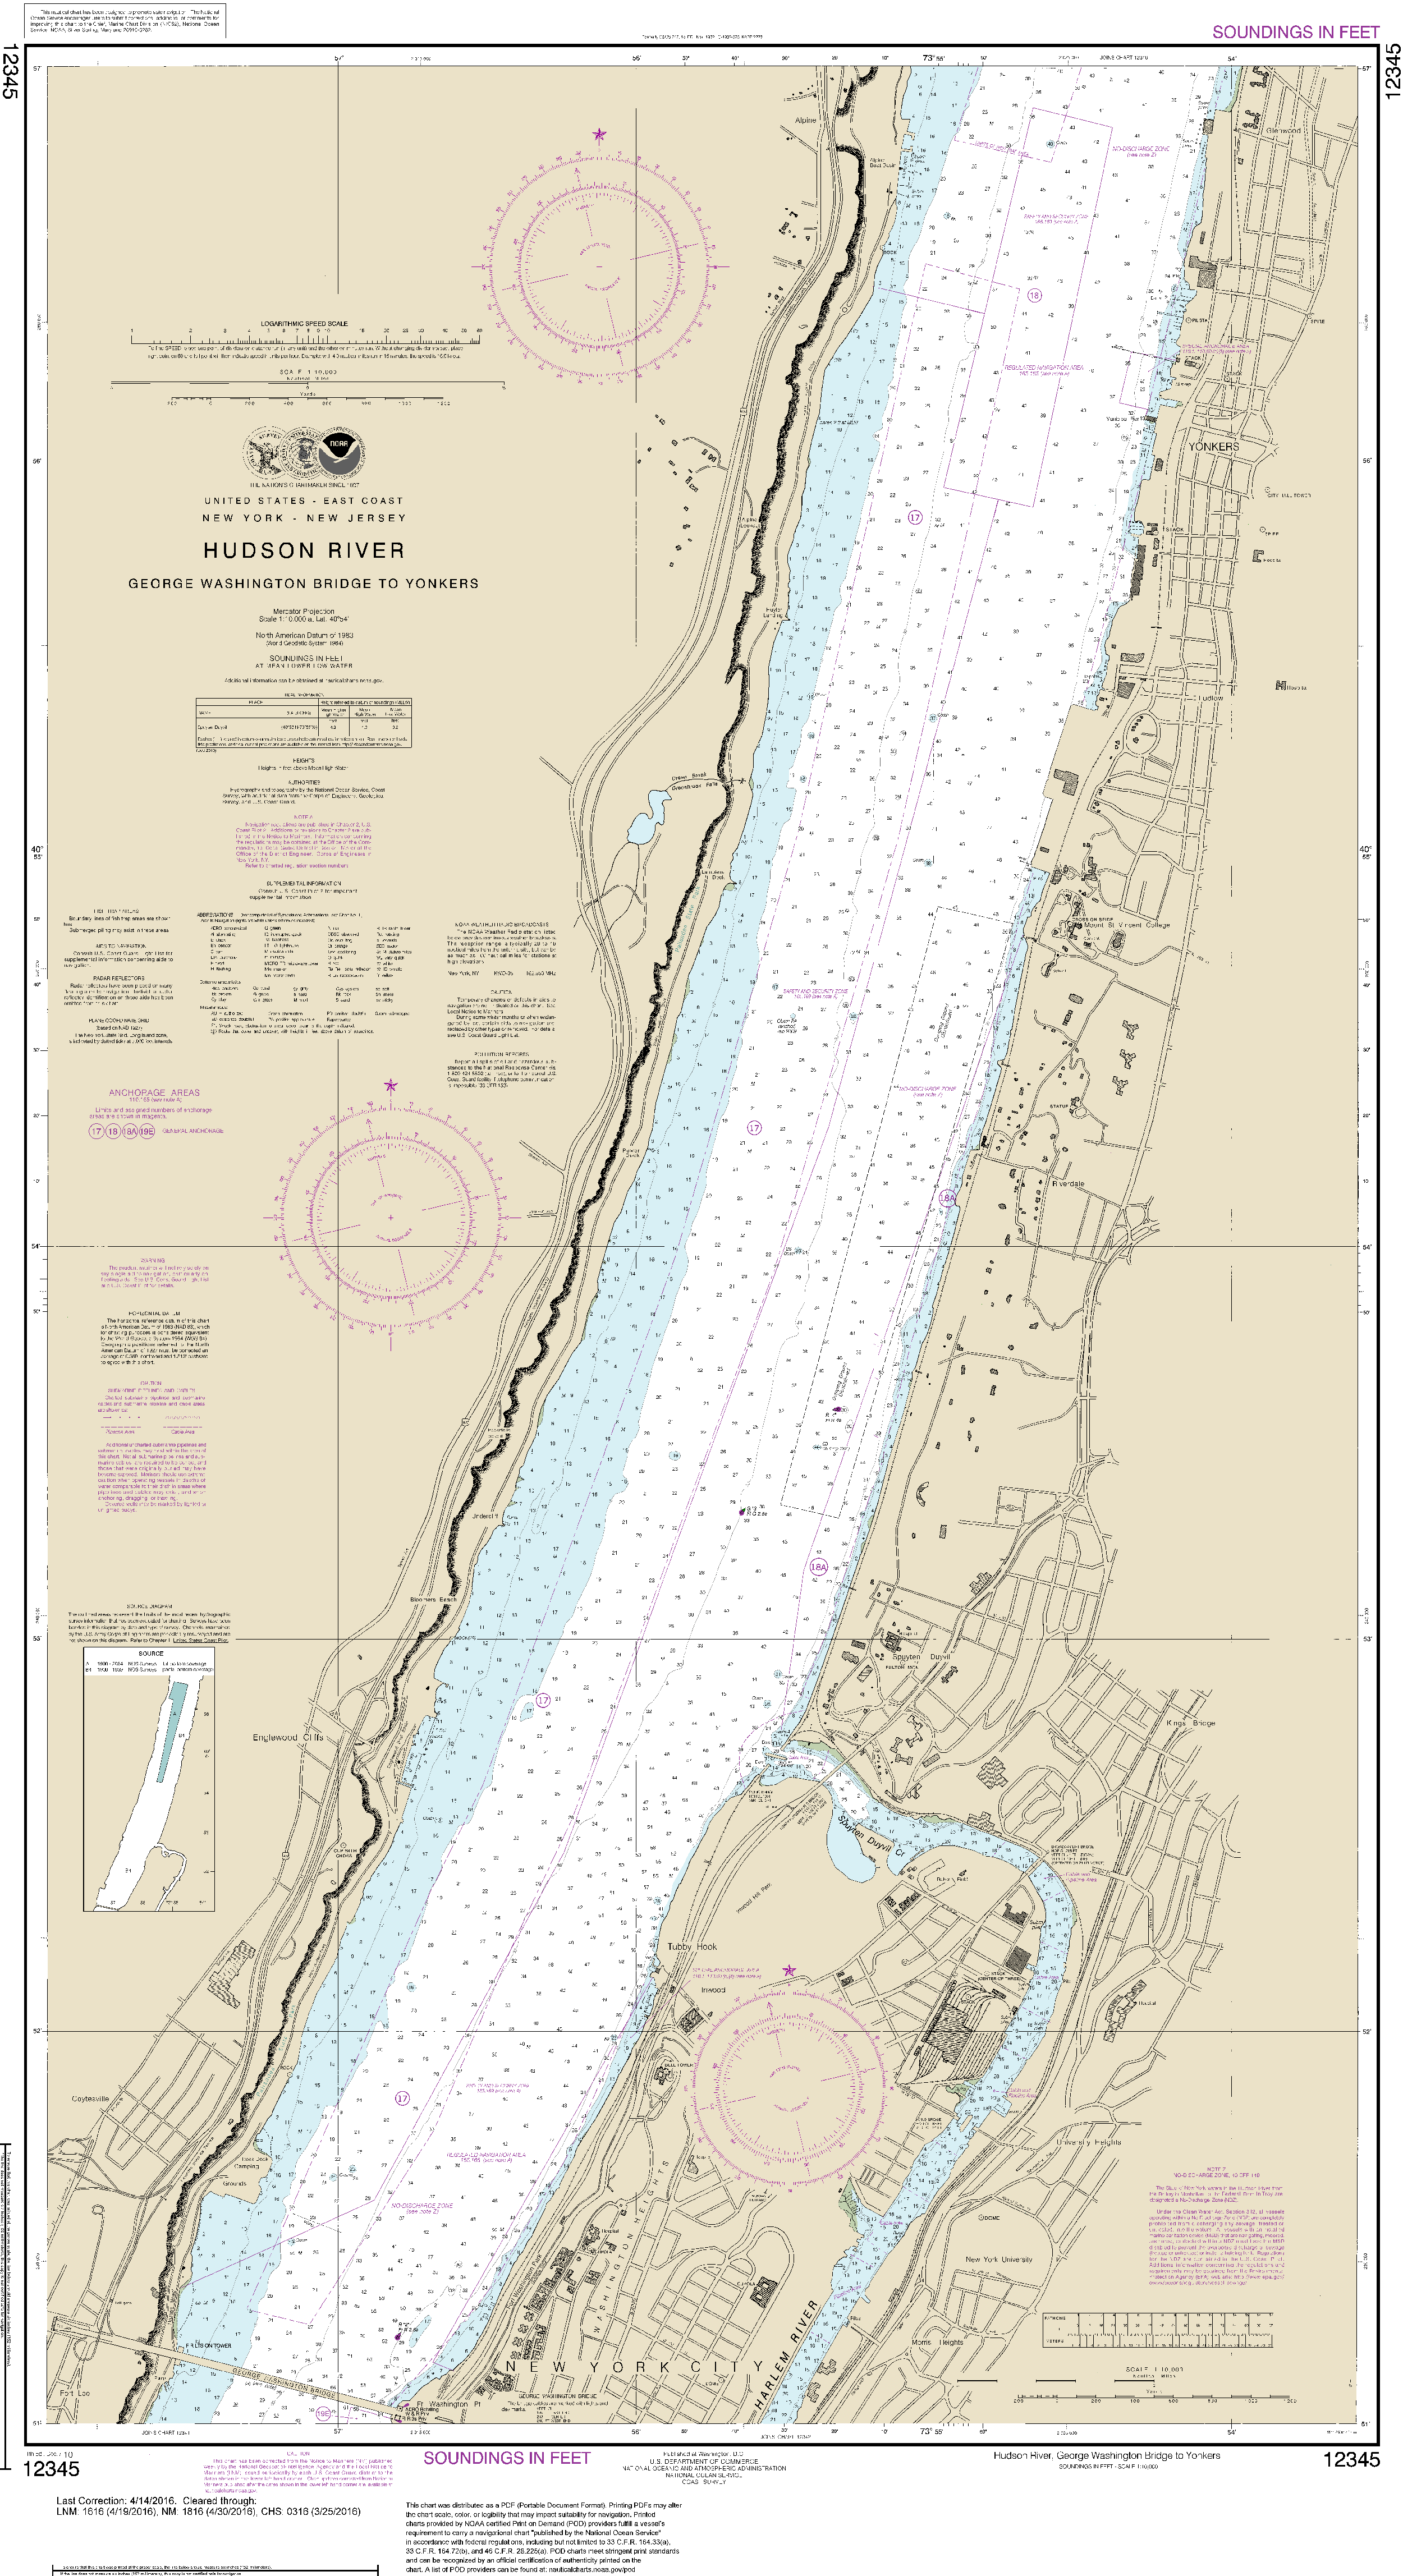 NOAA Nautical Chart 12345: Hudson River George Washington Bridge to Yonkers